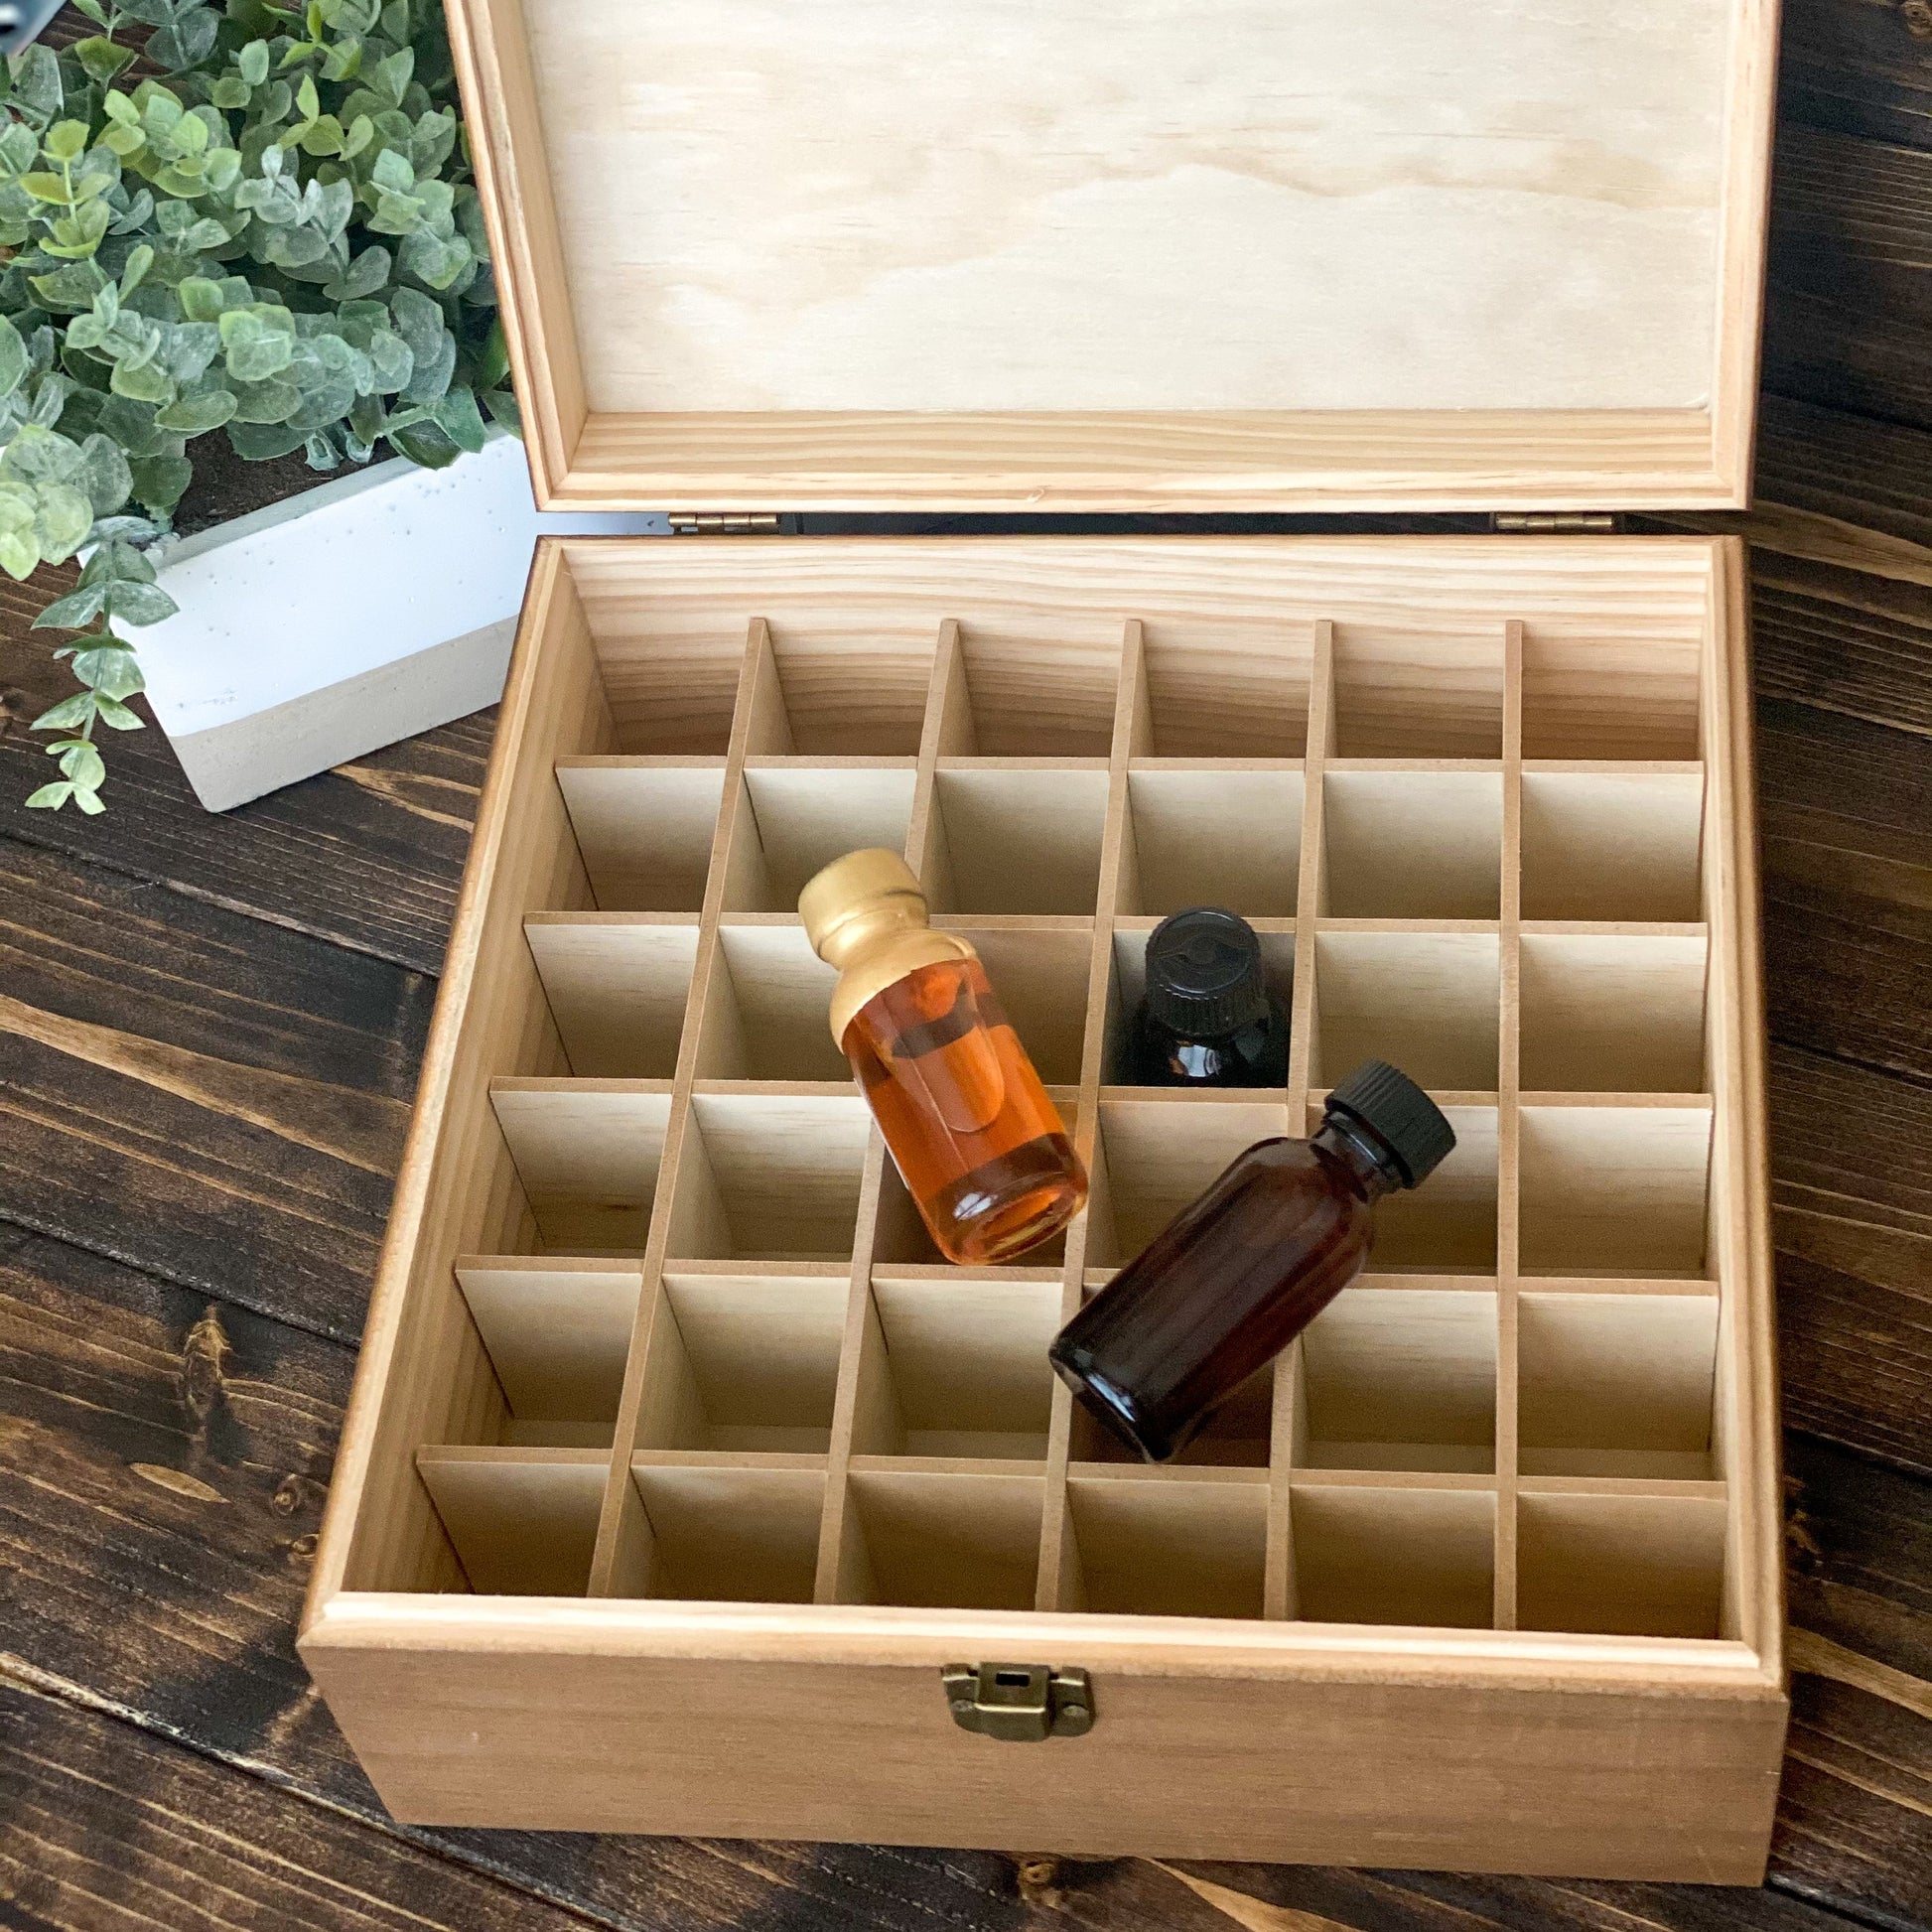 2 oz Whiskey Sample Bottle Decorative Storage box, box shown open with 3 sample bottles inside